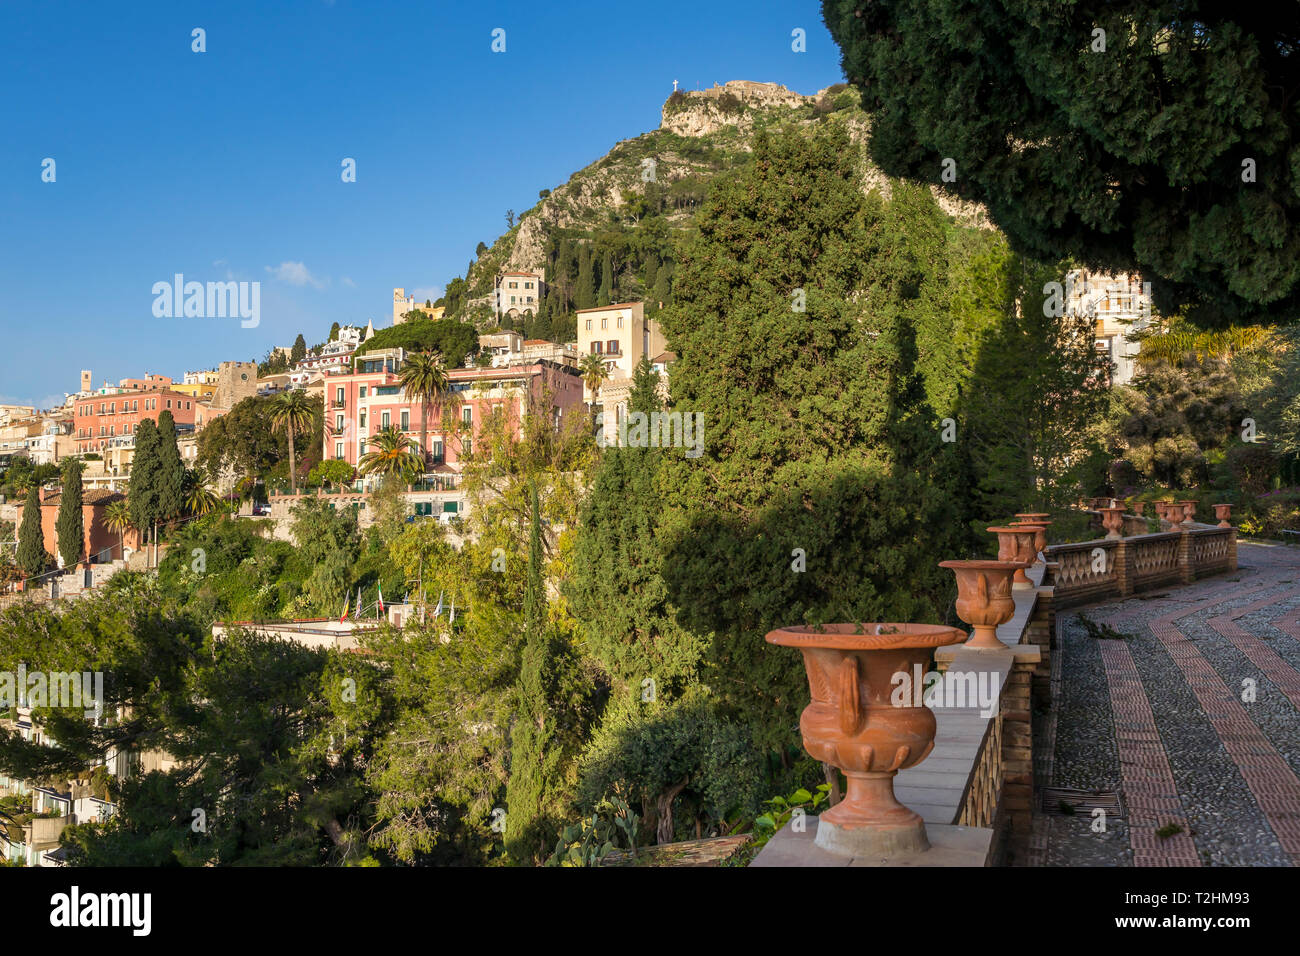 View from the public garden Parco Duca di Cesaro, Taormina, Sicily, Italy, Europe Stock Photo